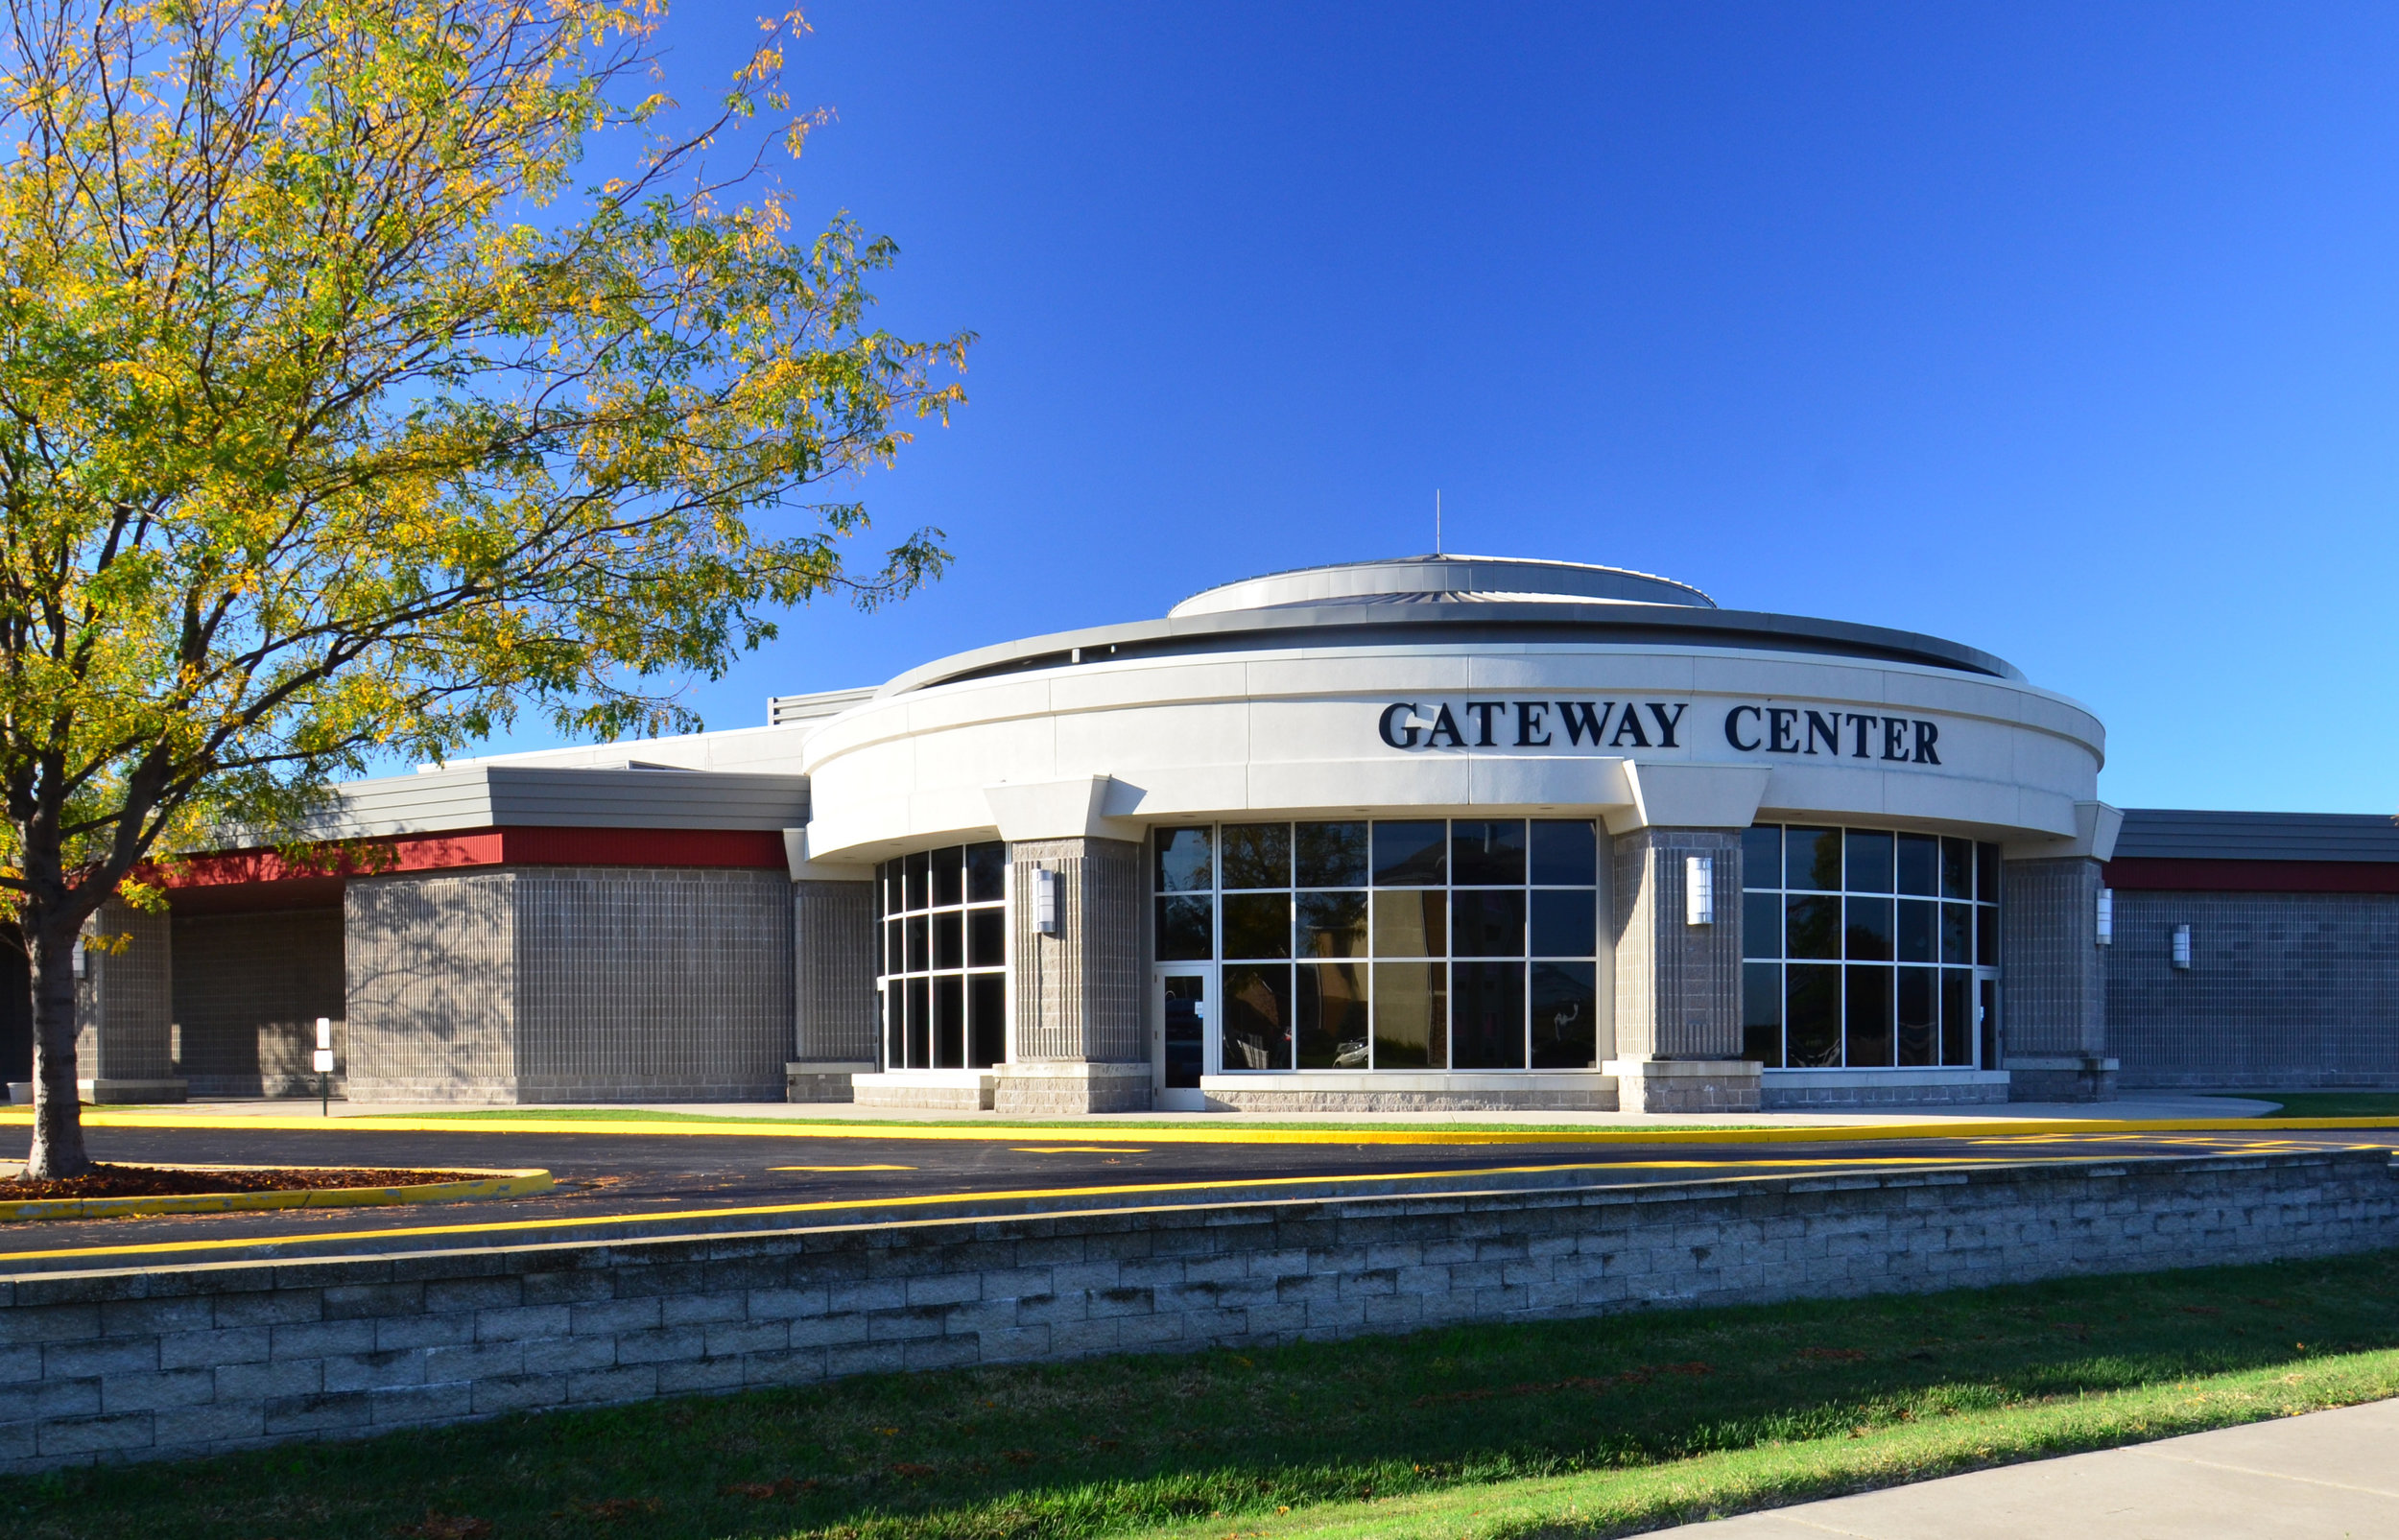 Gateway Convention Center Exterior (Copy)